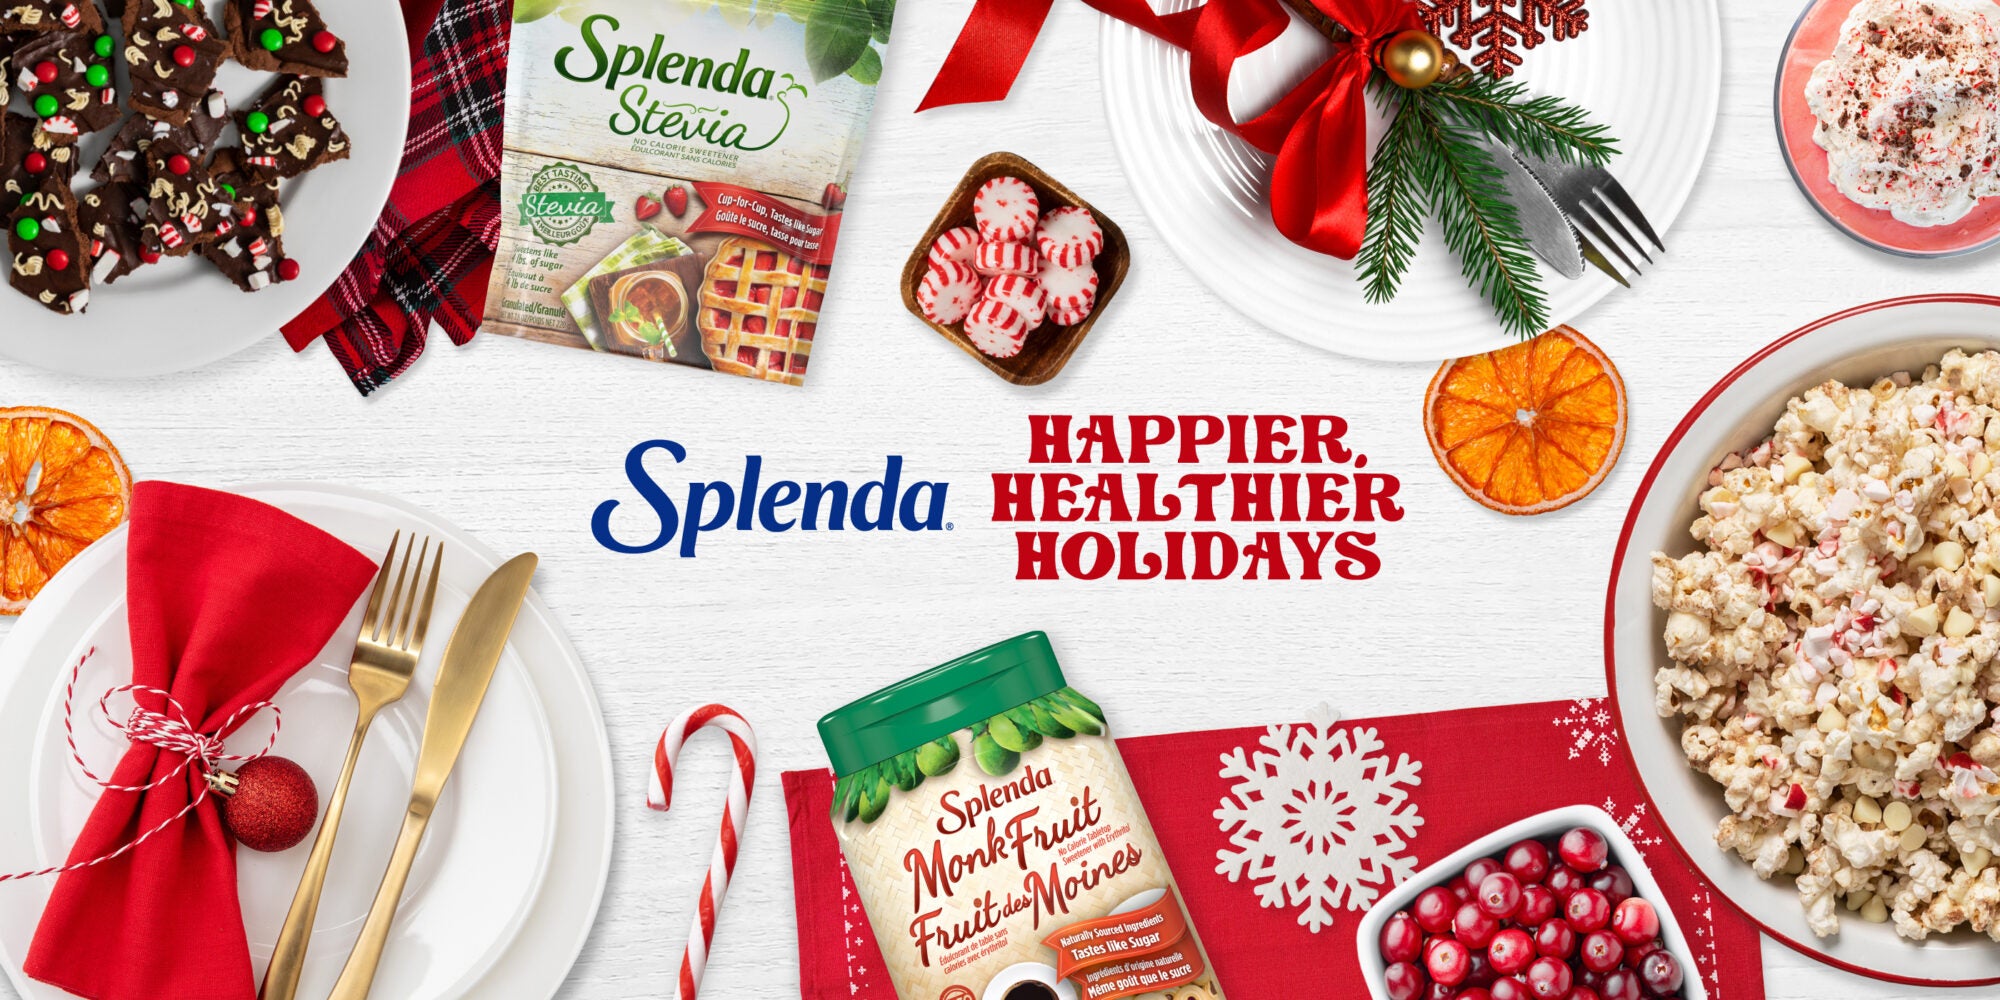 Happier, Healthier, Holidays with Splenda